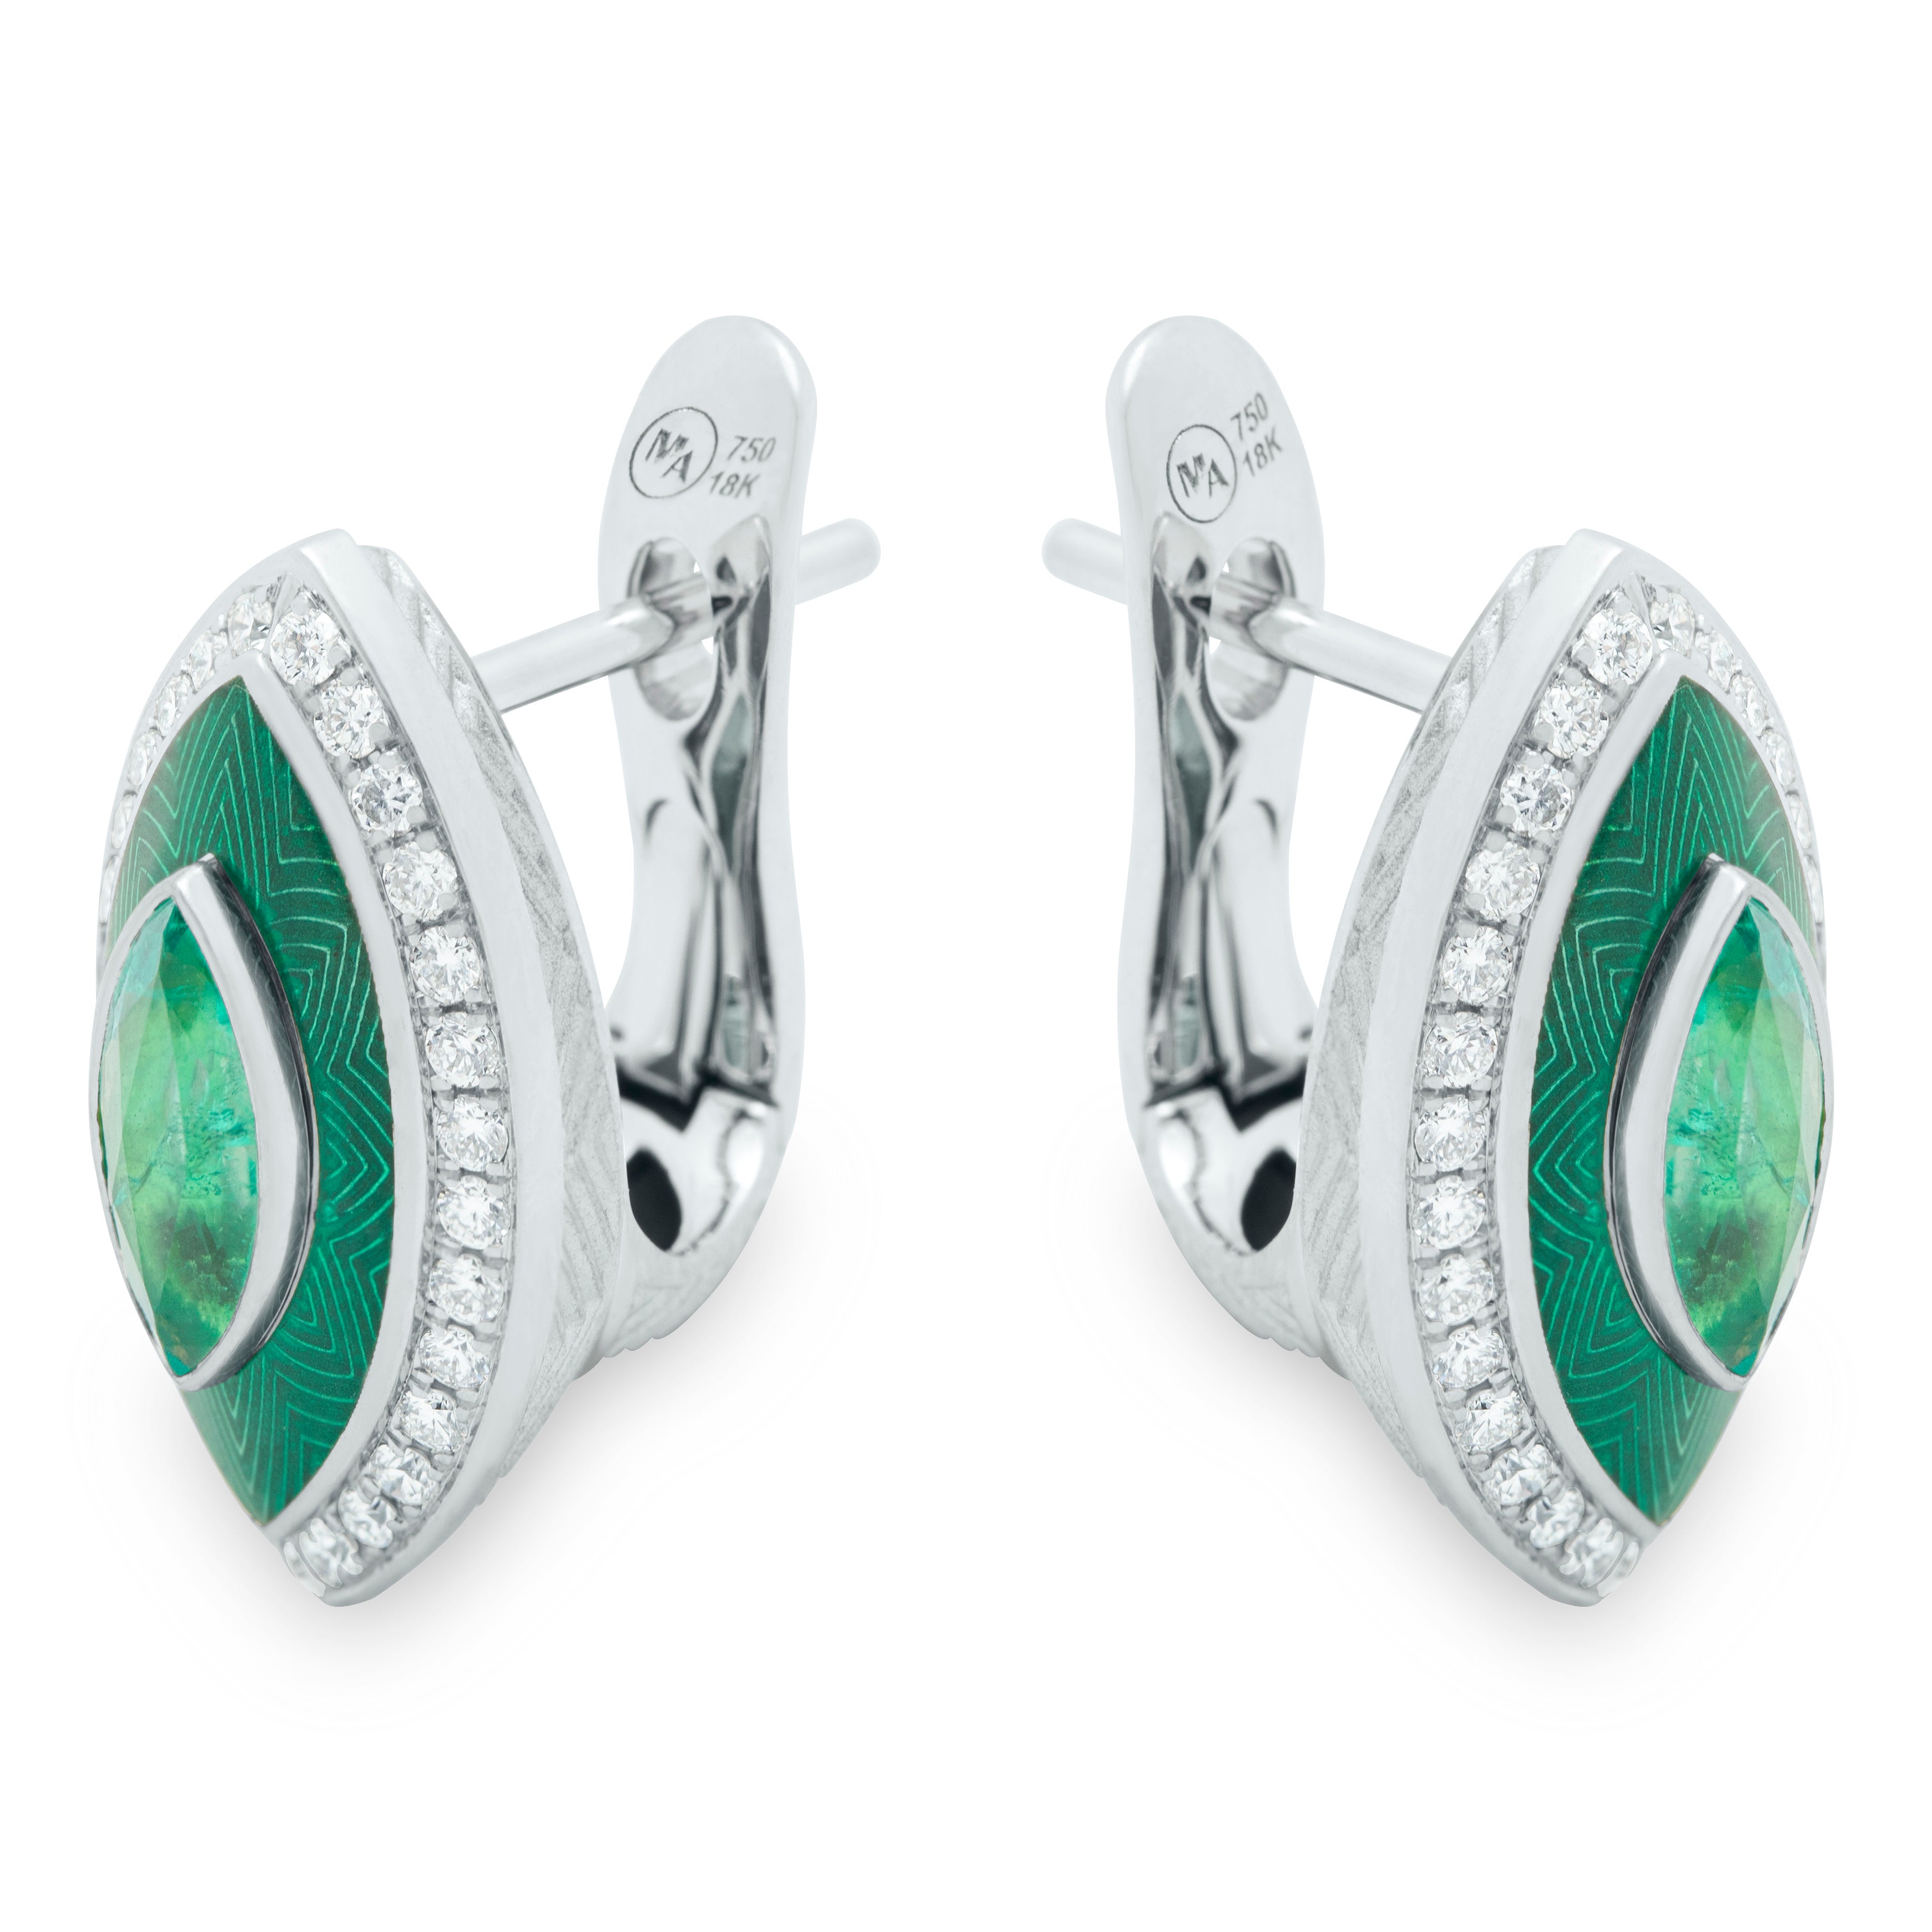 E 0084-11 18K White Gold, Enamel, Emerald, Diamonds Earrings